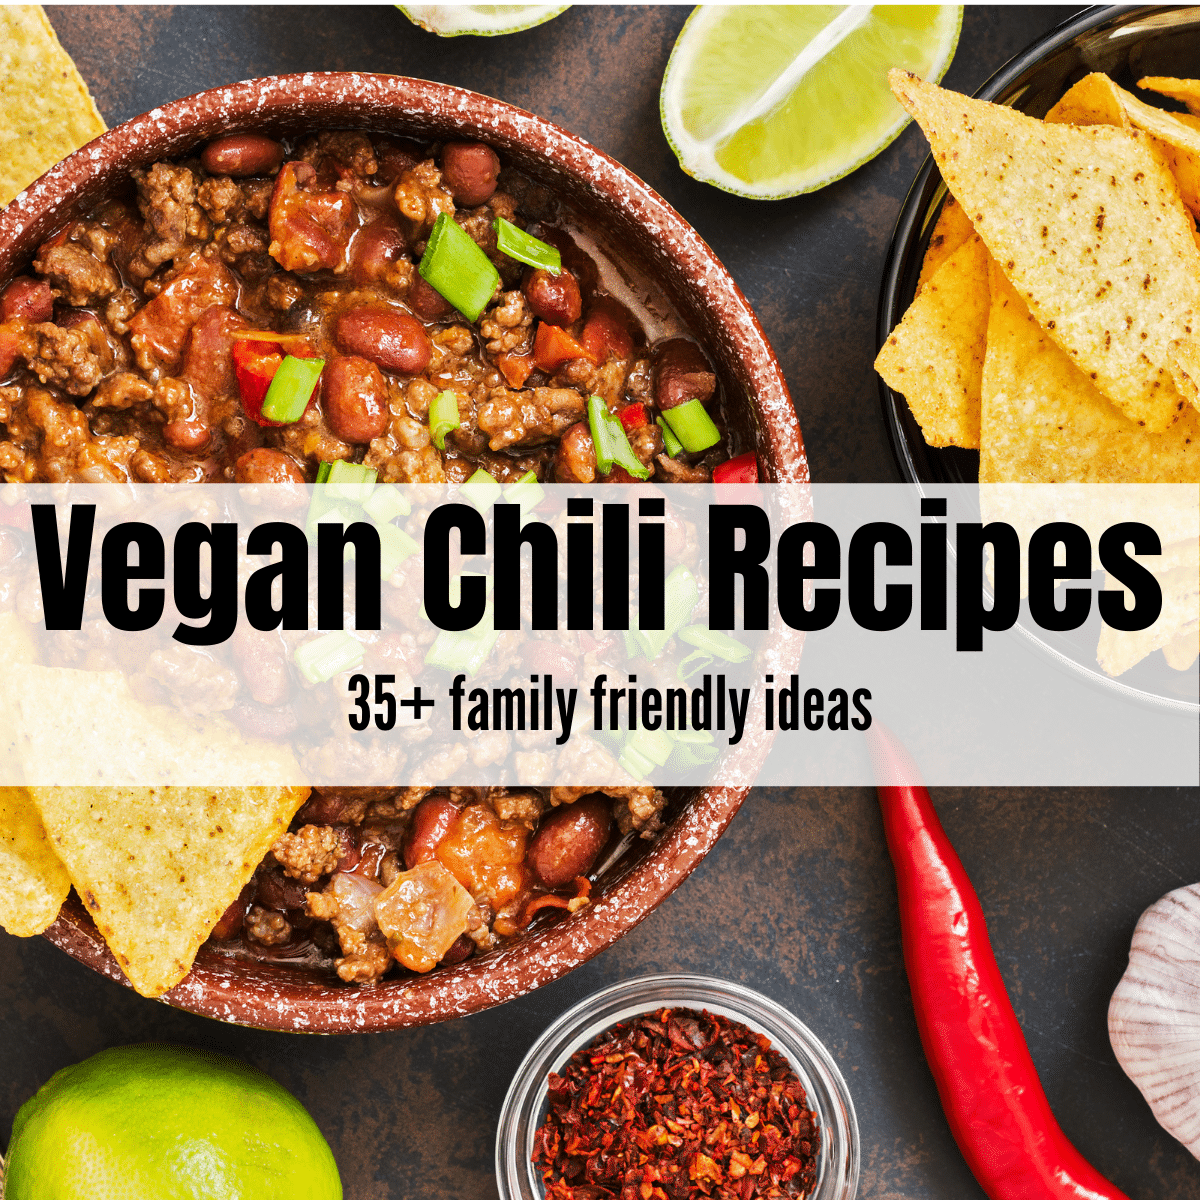 Vegan Chili Recipes: 35 Delicious Chili Recipes for Vegetarians and Vegans